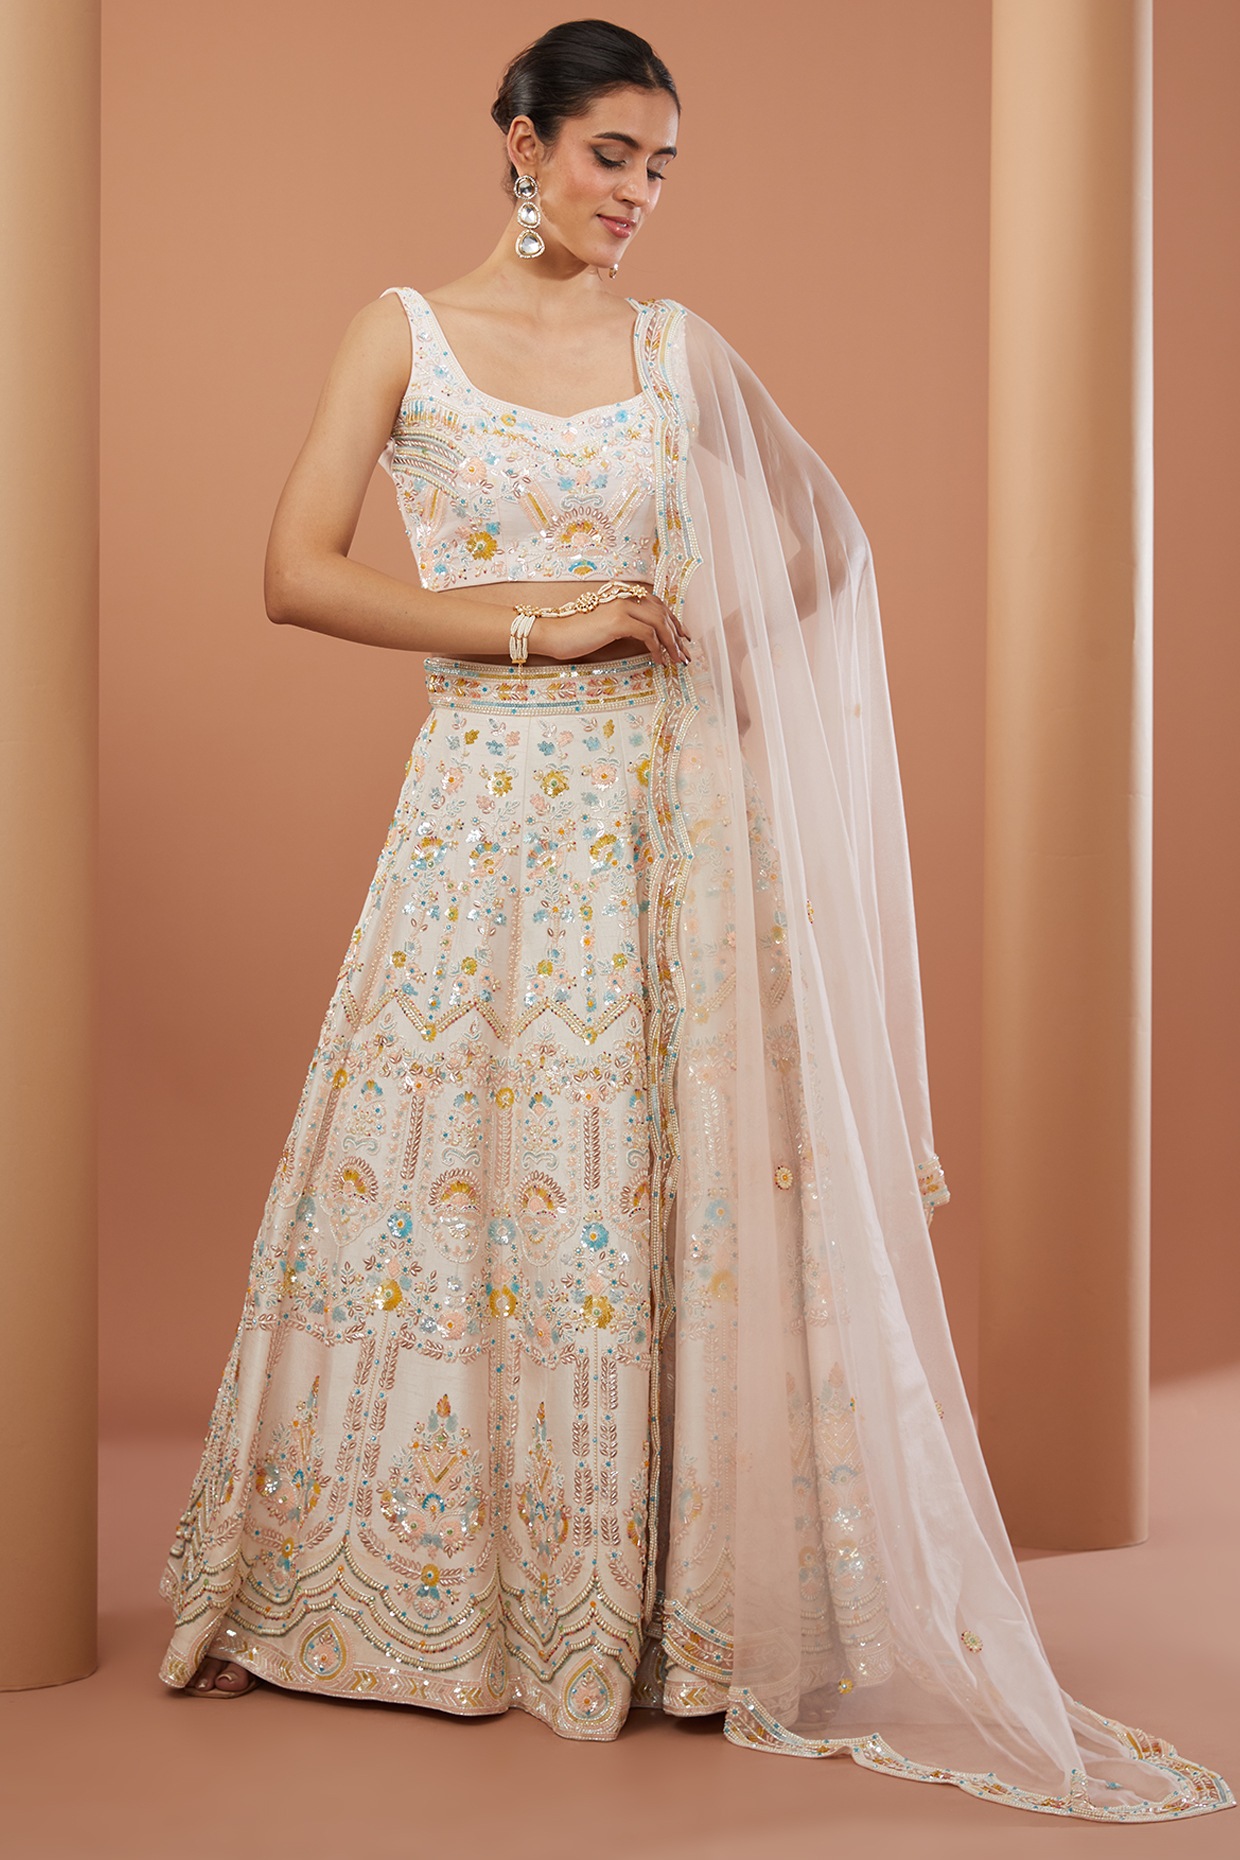 Stylist Multi Color Lehenga Choli With One Side Sleeve Shrug - Shivam  E-Commerce at Rs 2599.00, Surat | ID: 2850615161691